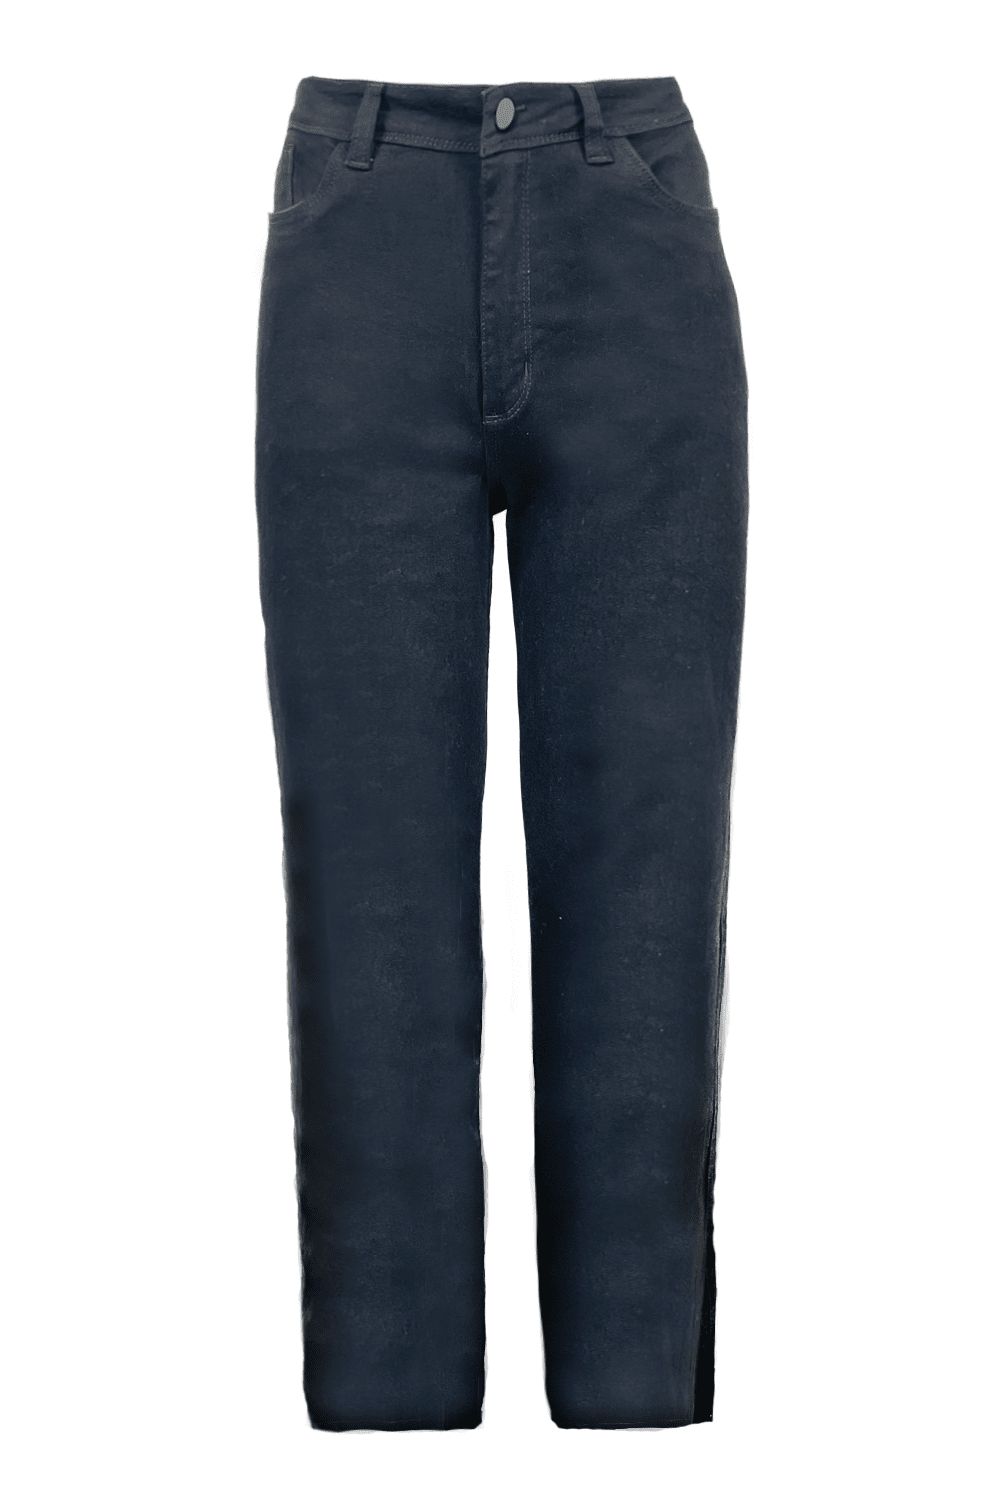 Katya Jeans Black Pants